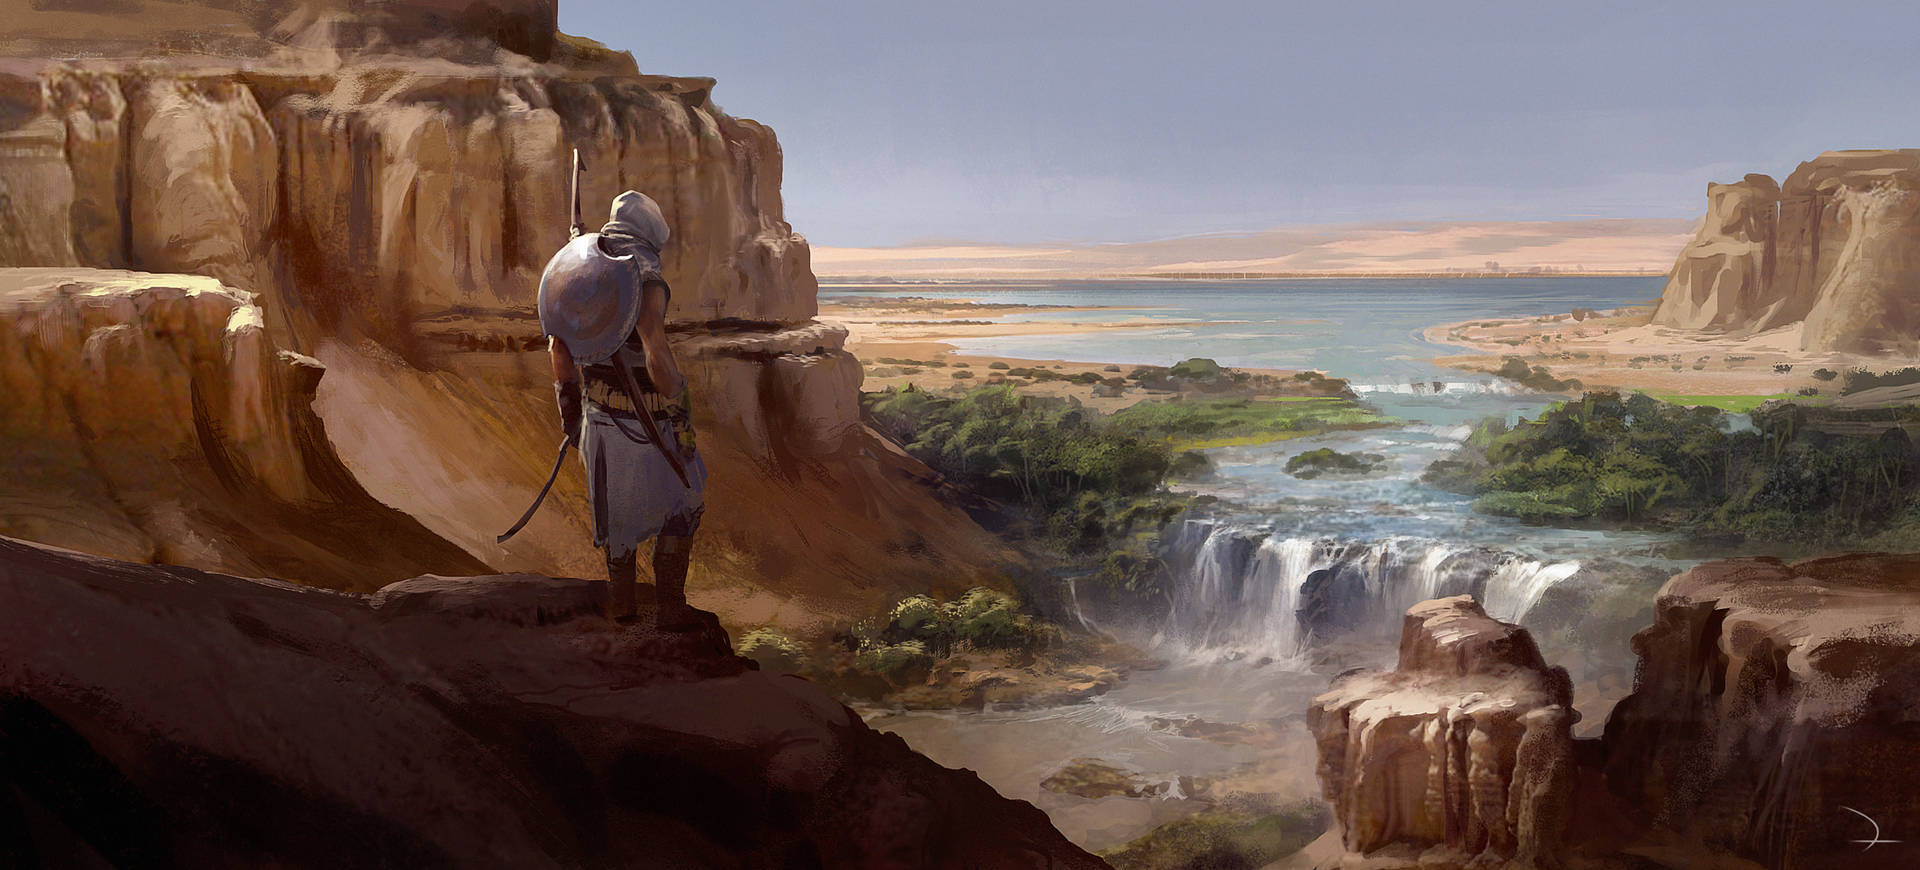 River Assassins Creed Origins Background